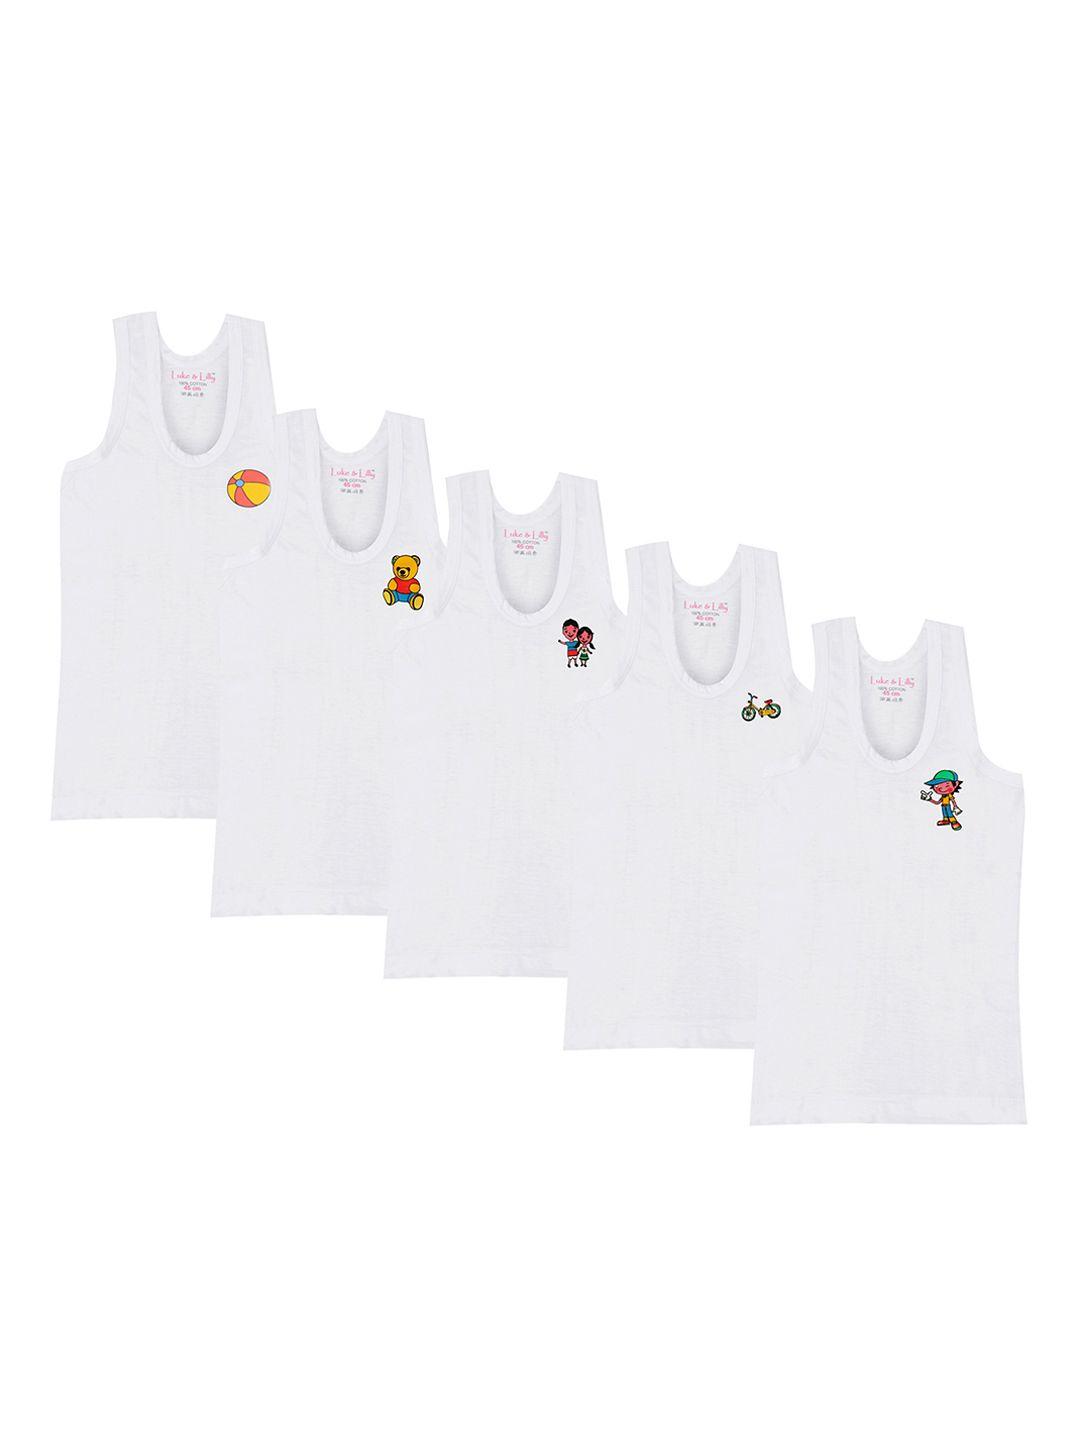 luke & lilly boys pack of 5 solid printed innerwear vests lnlkdsvst001